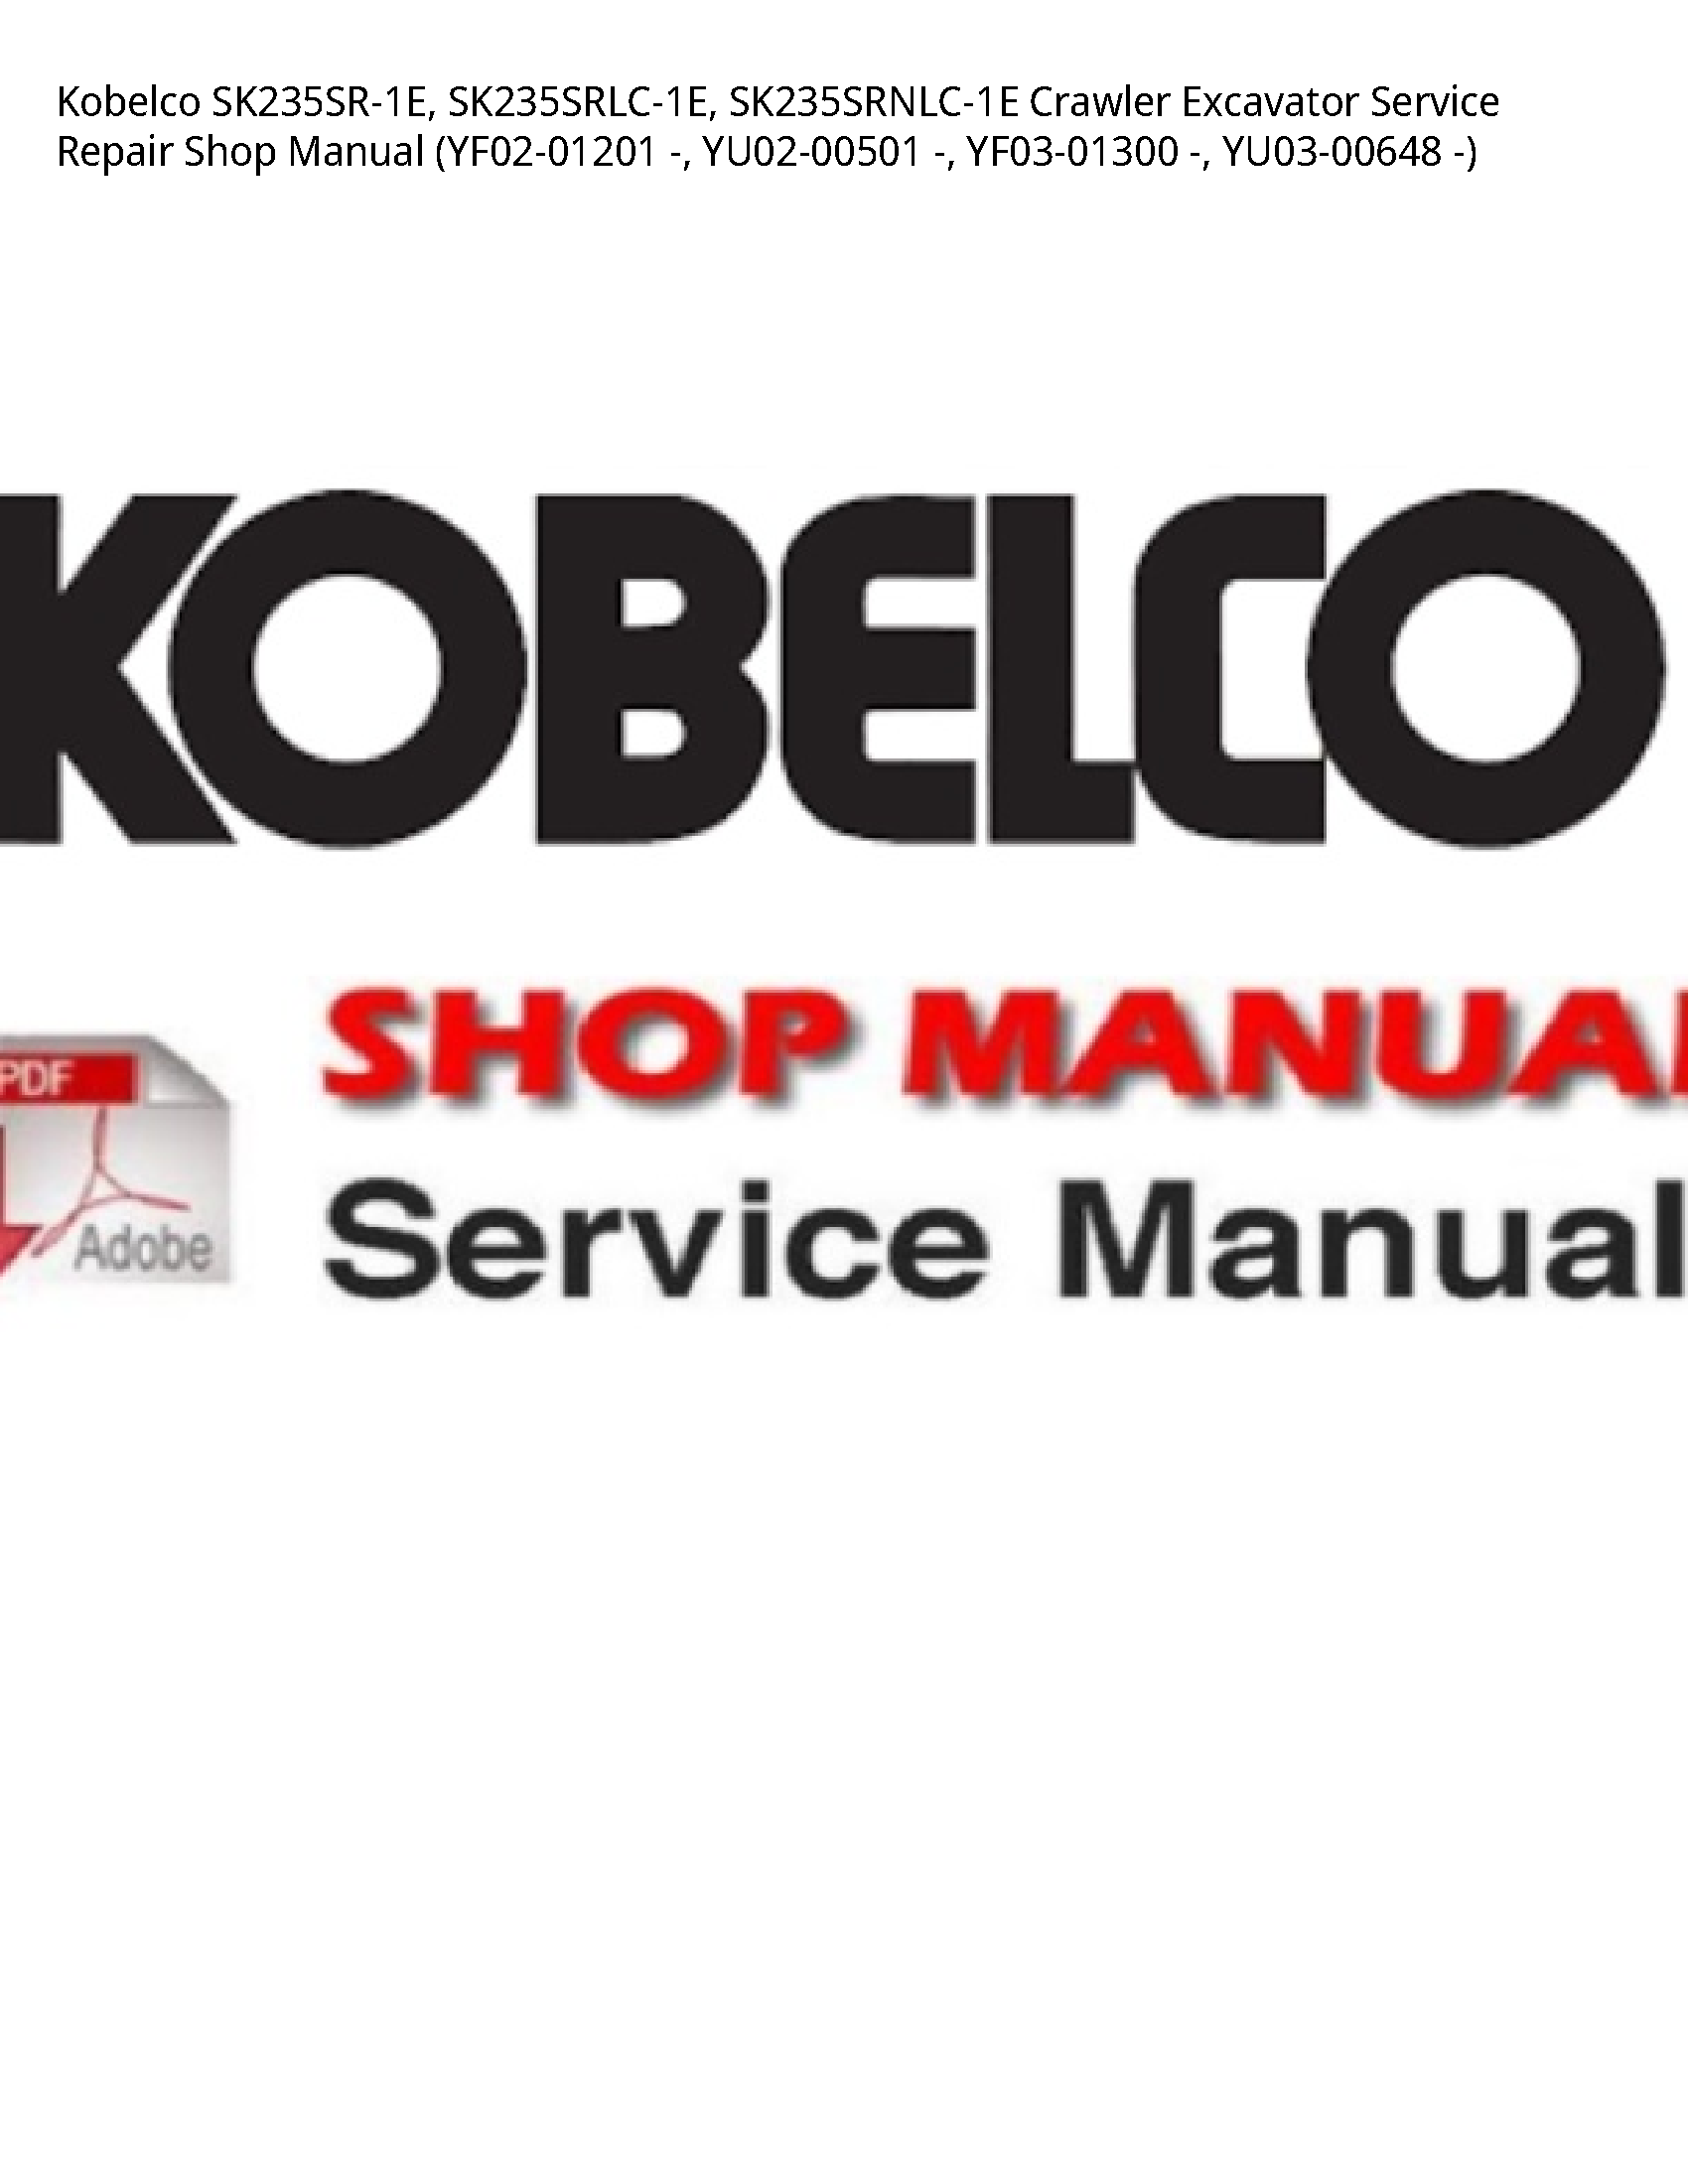 Kobelco SK235SR-1E Crawler Excavator manual